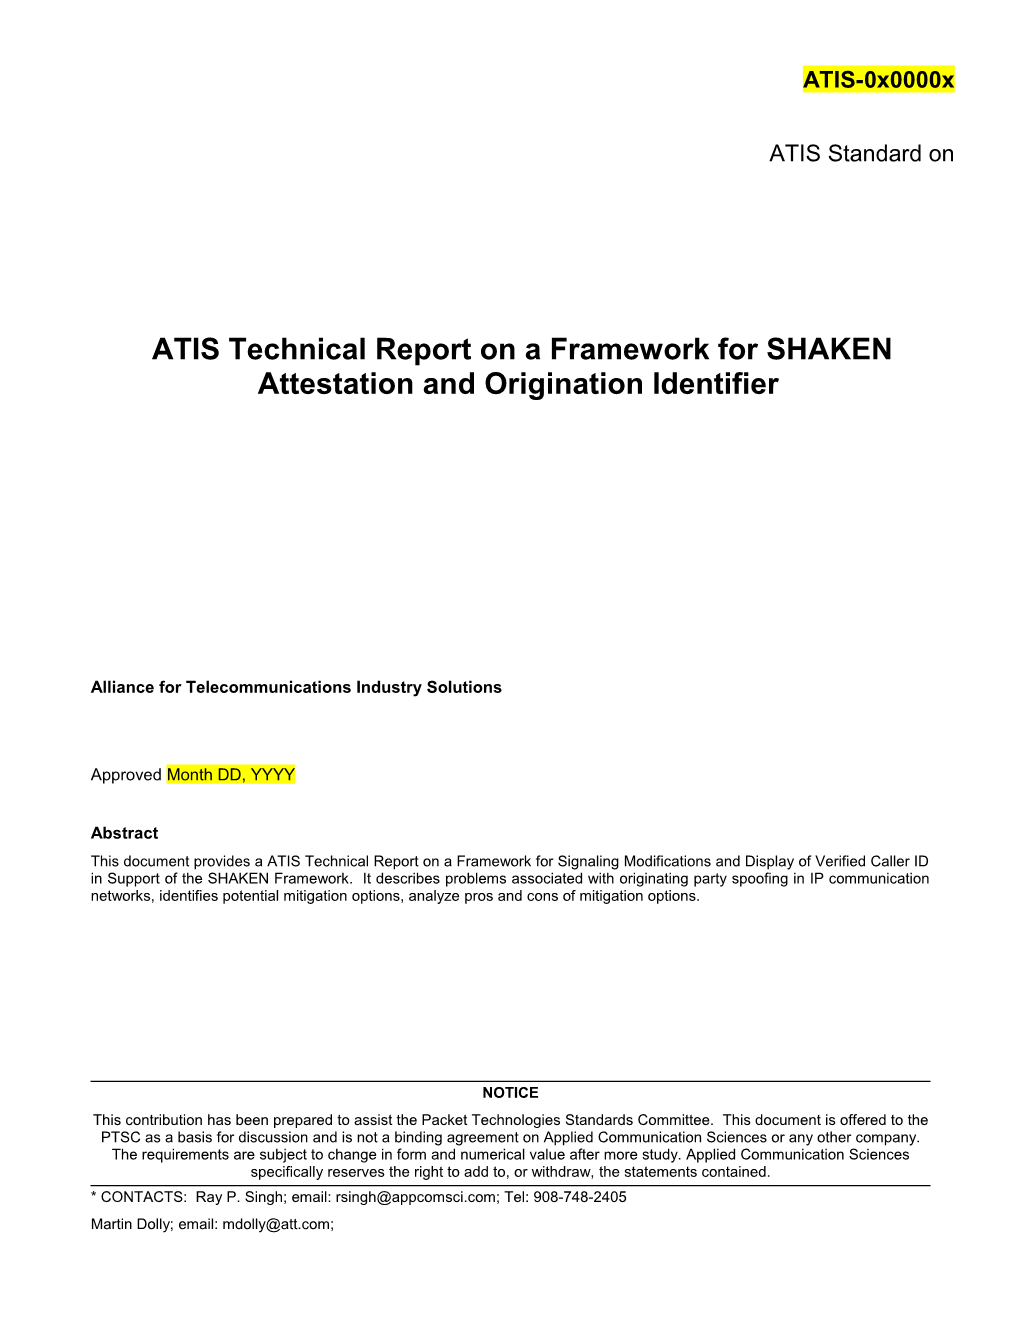 ATIS Technical Report on a Framework for SHAKEN Attestation and Origination Identifier